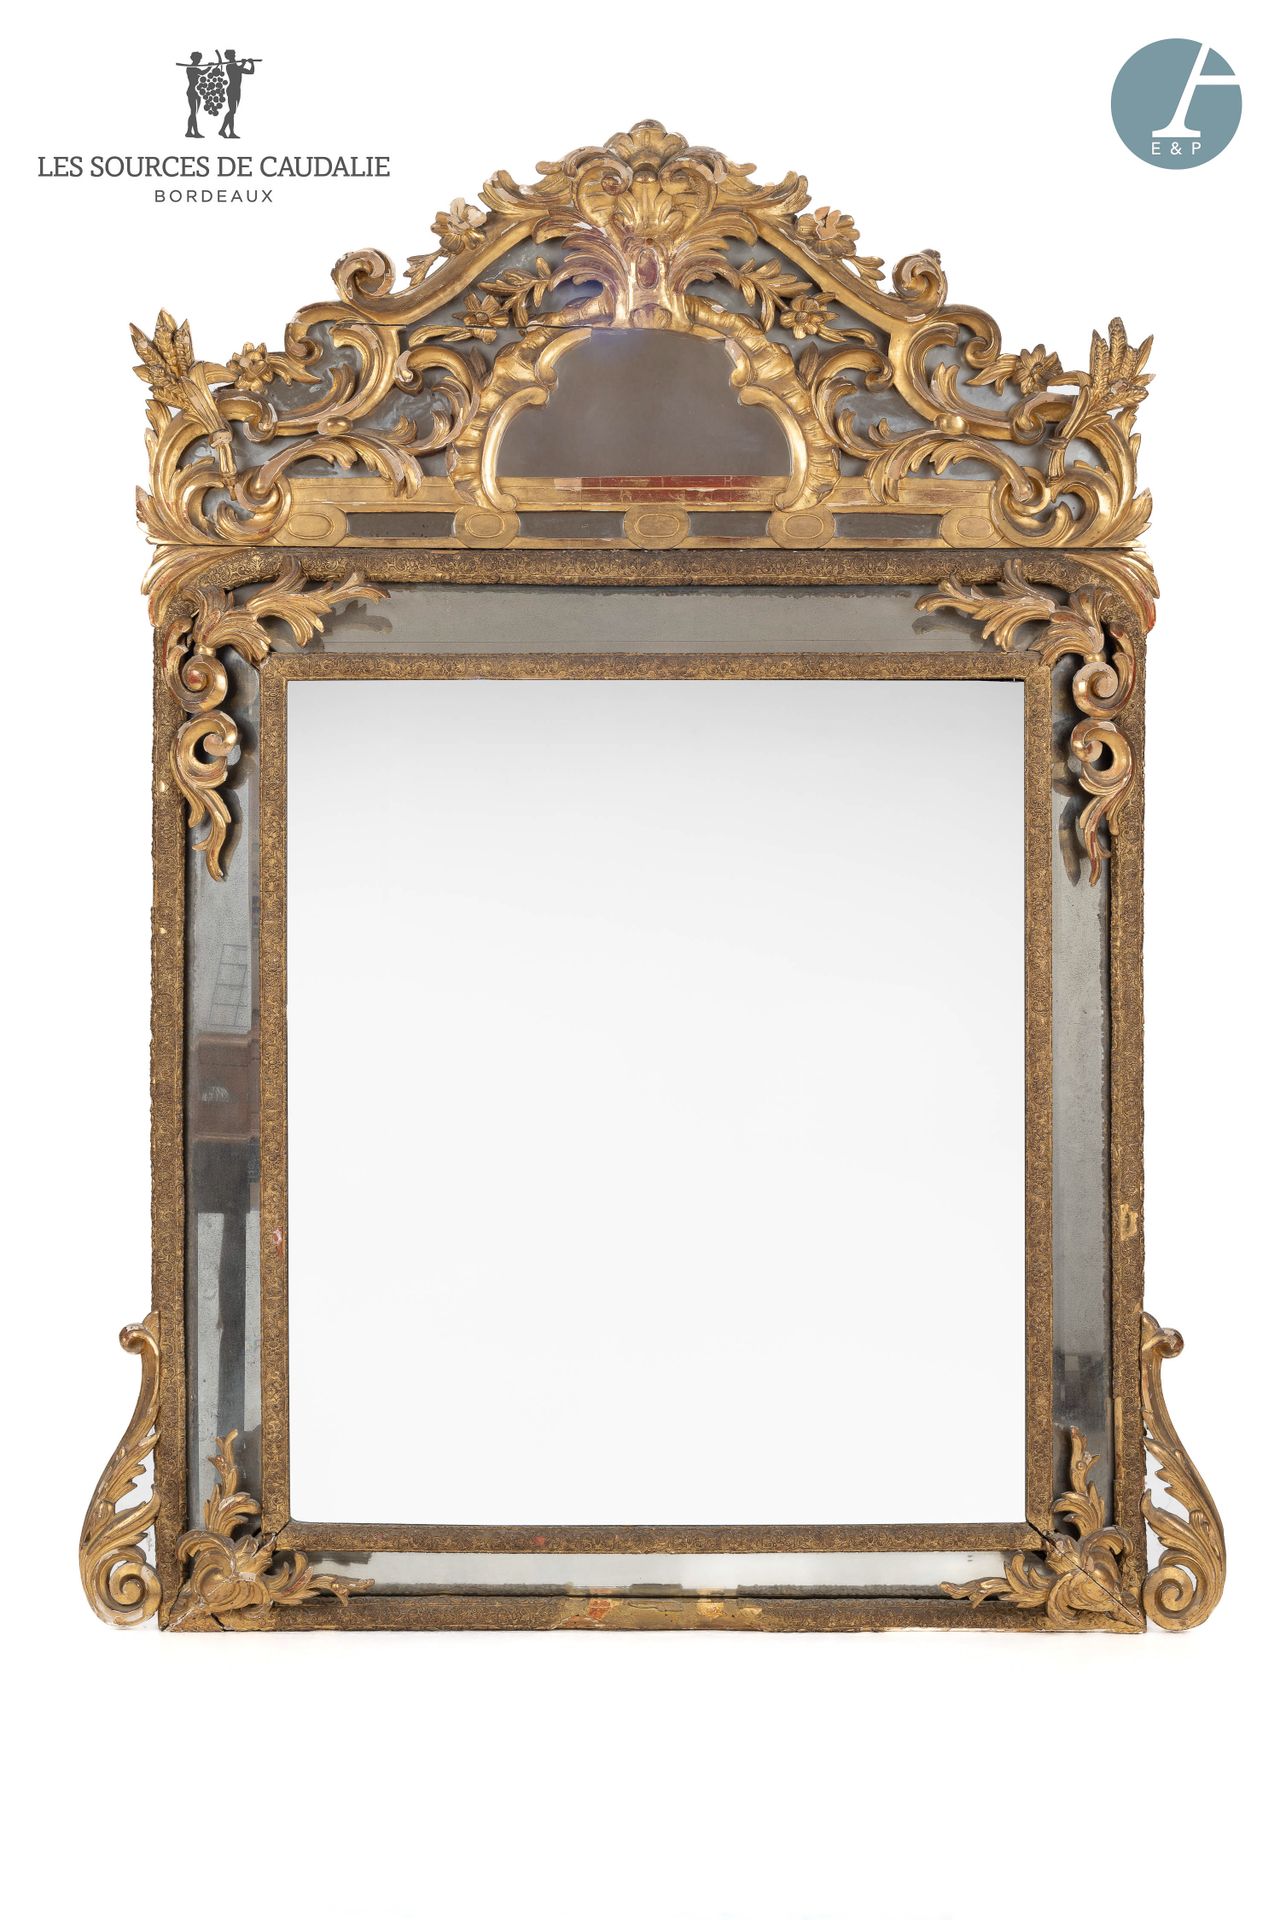 Null From Sources de Caudalie (Grange à Bateaux)
Large mirror with a moulded, ca&hellip;